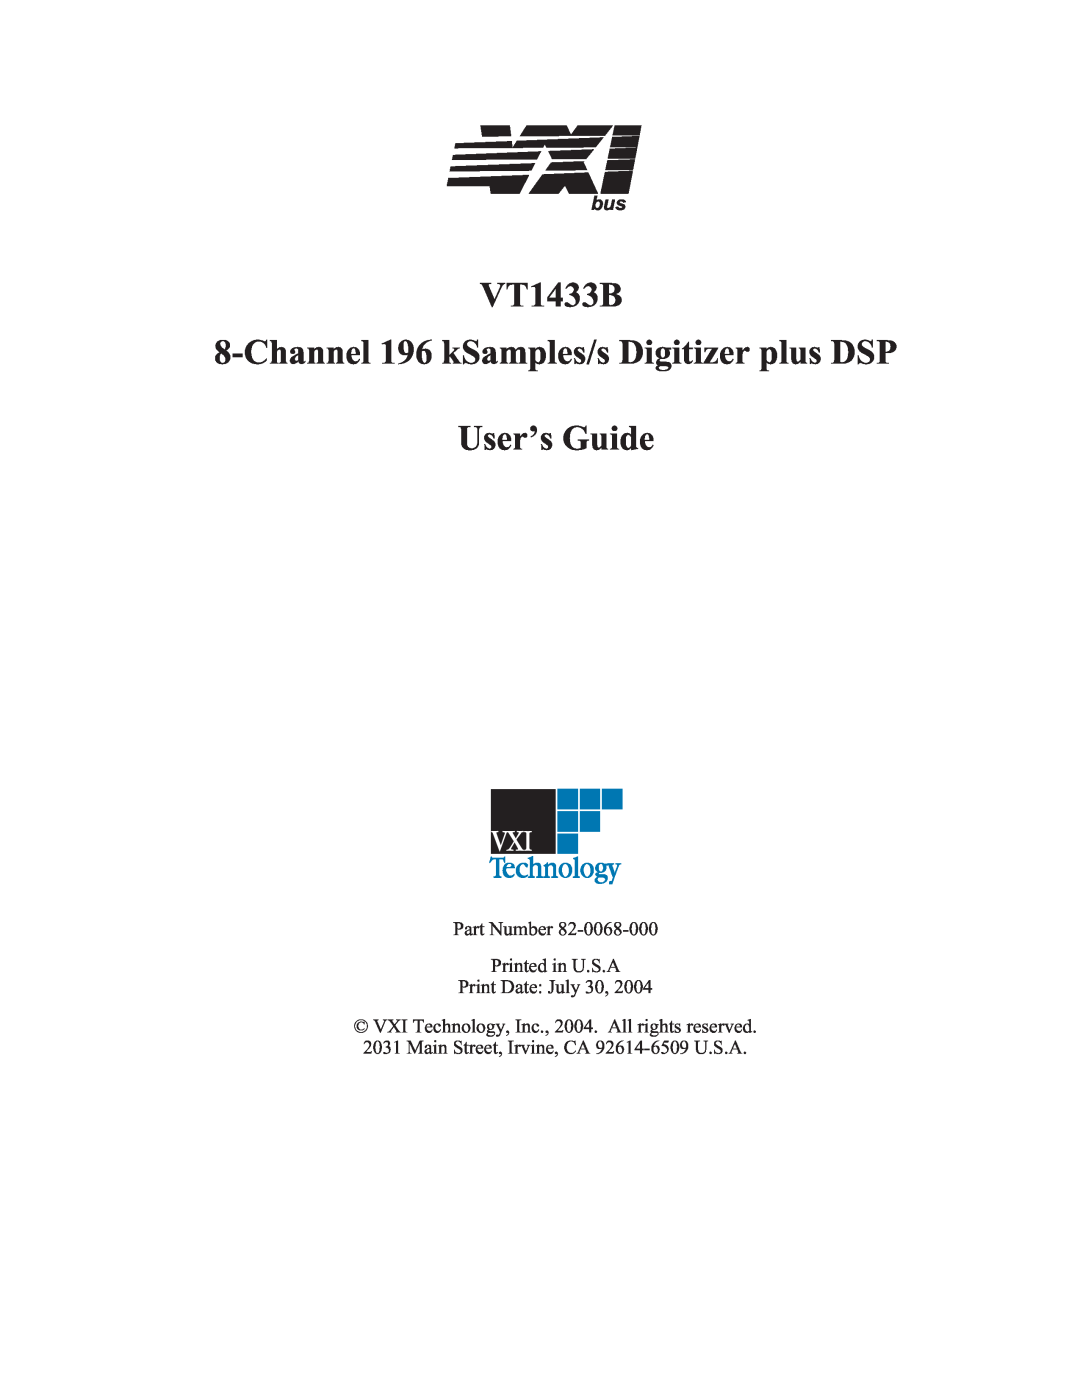 VXI VT1433B manual Channel196 kSamples/s Digitizer plus DSP, User’s Guide 